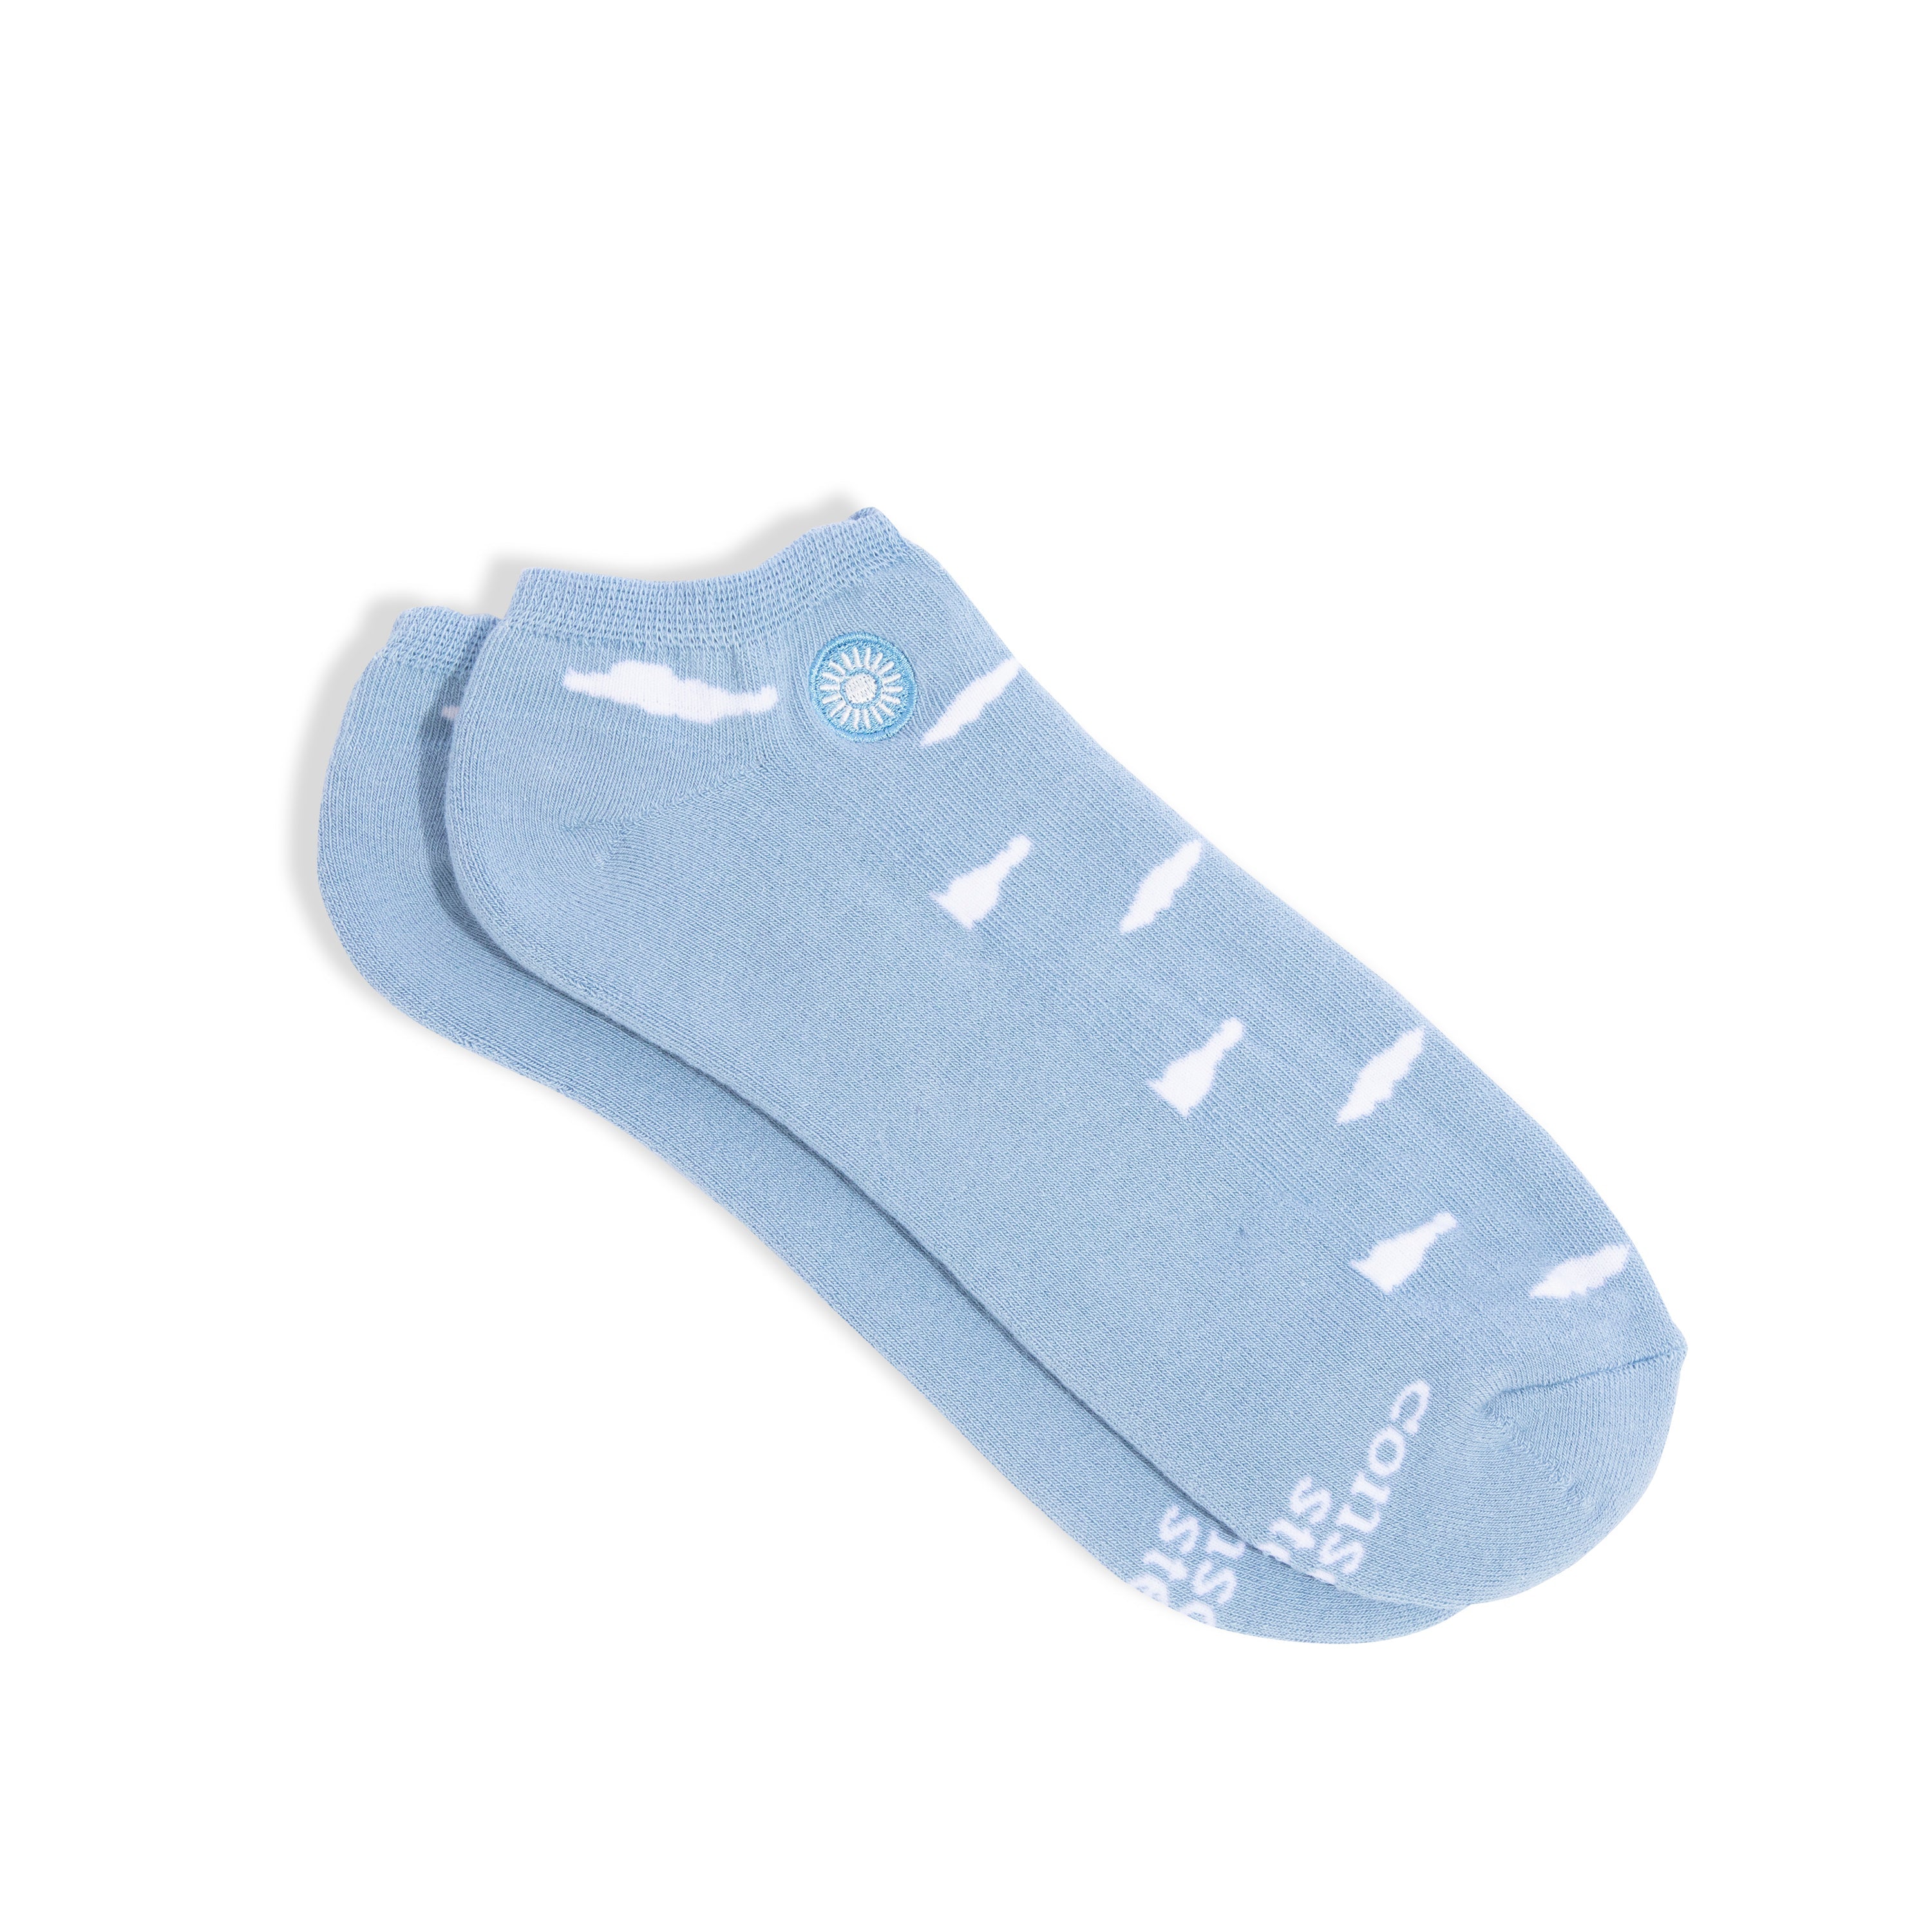 Socks that support mental health - Low Cut